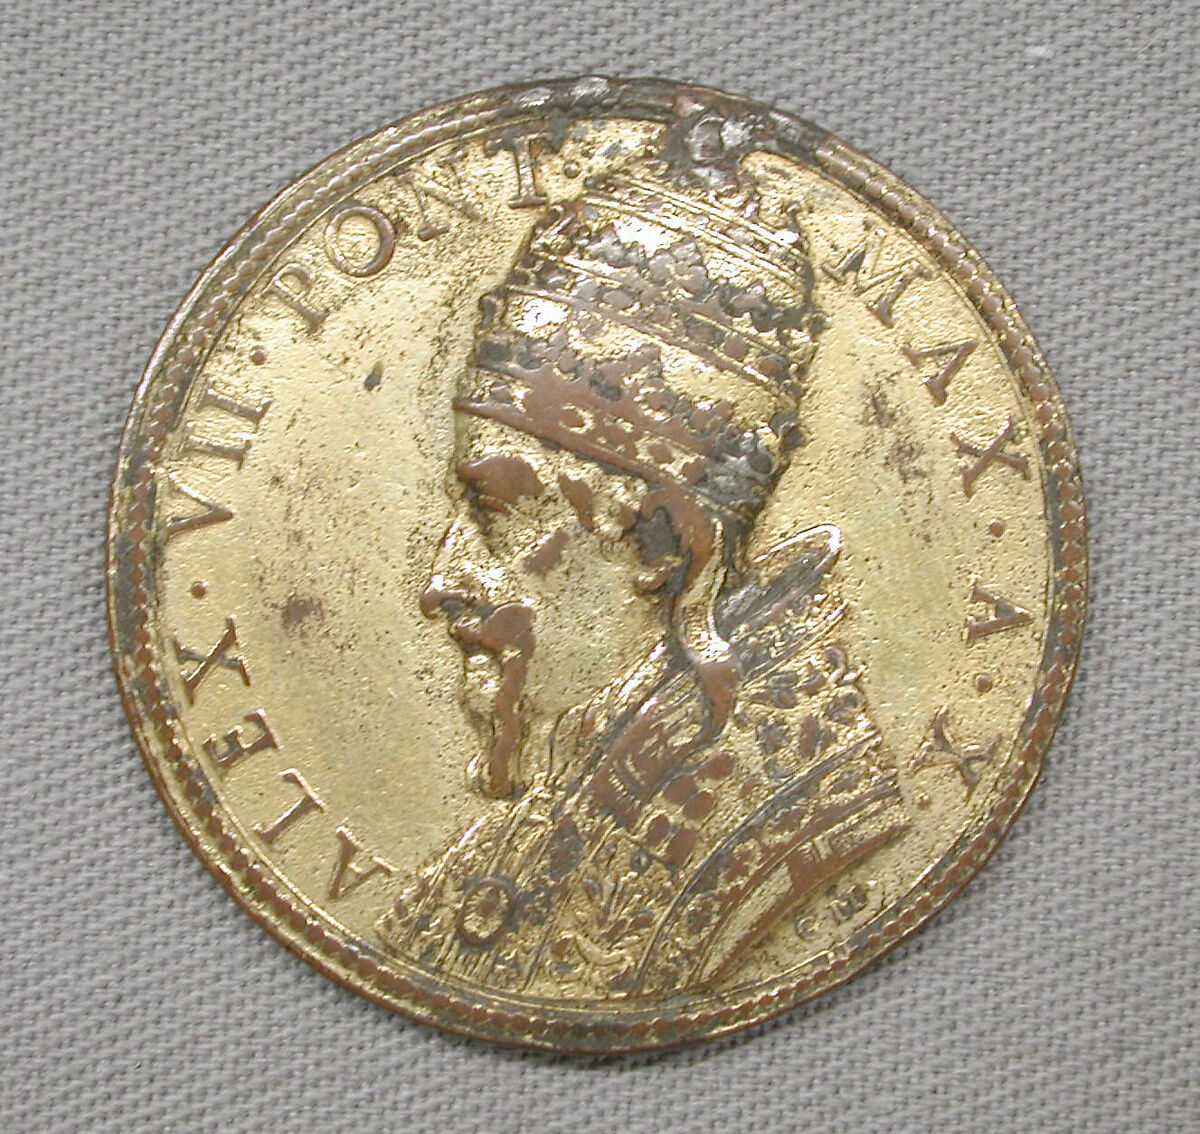 Pope Alexander VII, Medalist: Gasparo Morone (Italian, born Milan (?), died Rome, 1669), Gilt bronze, Italian 